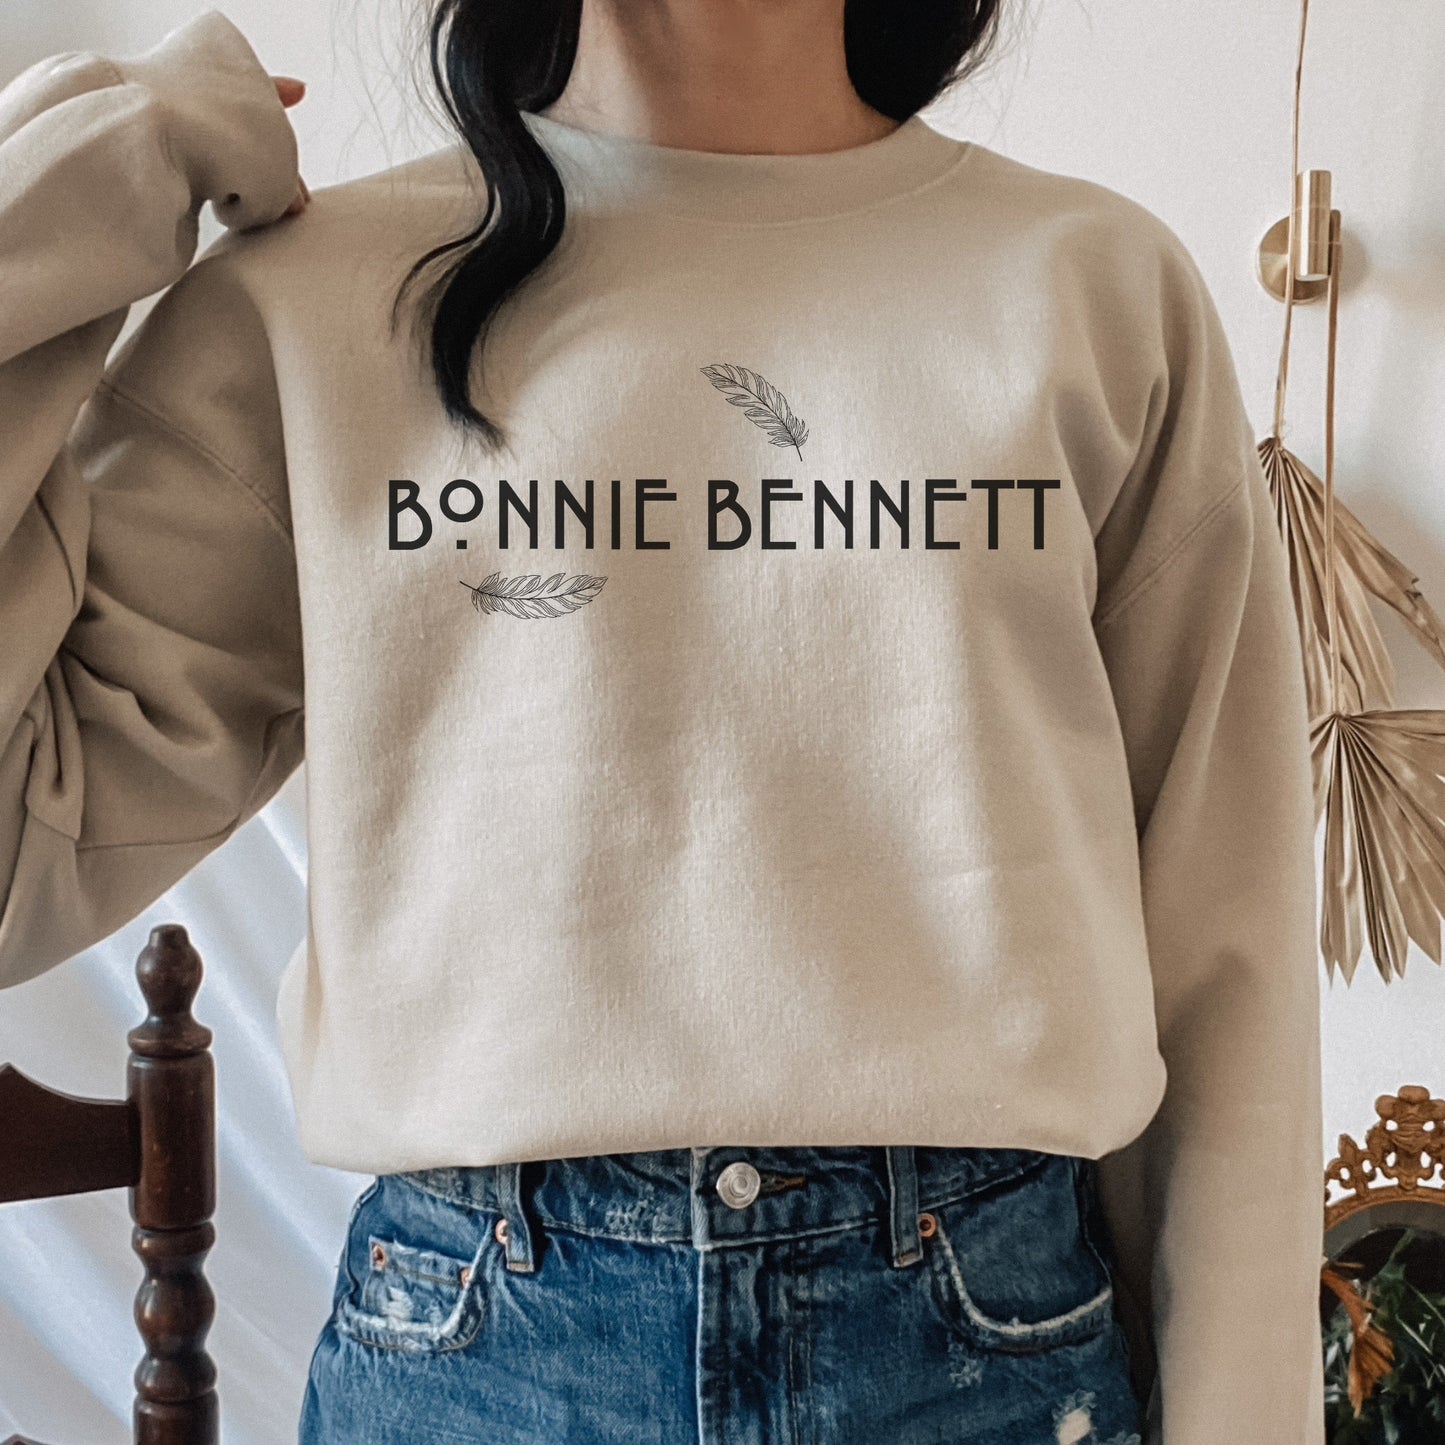 Bonnie Bennett Shirt,  TVD Shirt, tvd sweatshirt The Vampire Diaries Merch, TVD apparel, tvd fan gift